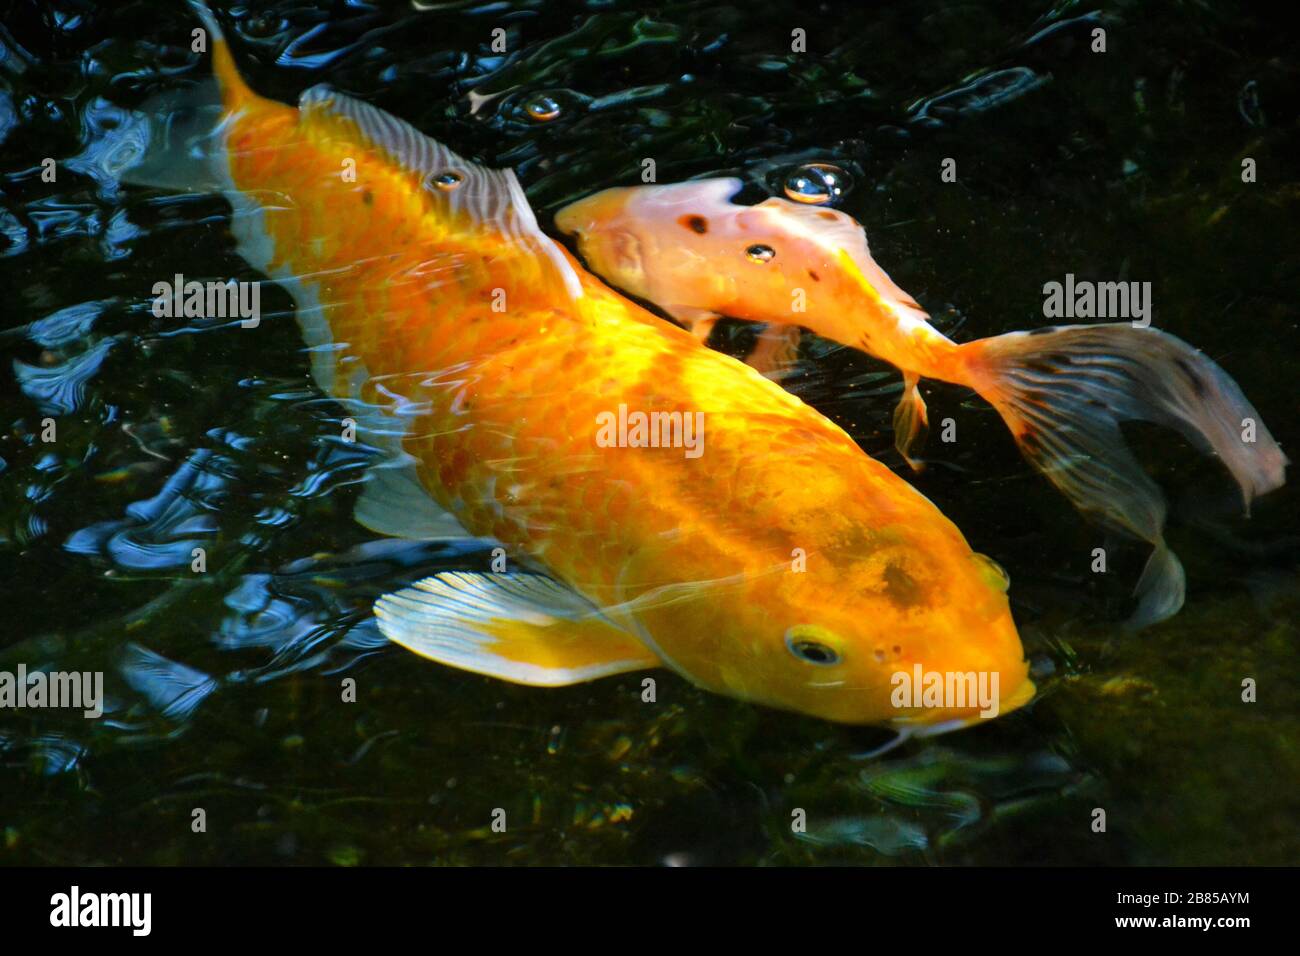 Two Koi carps in a pond Stock Photo